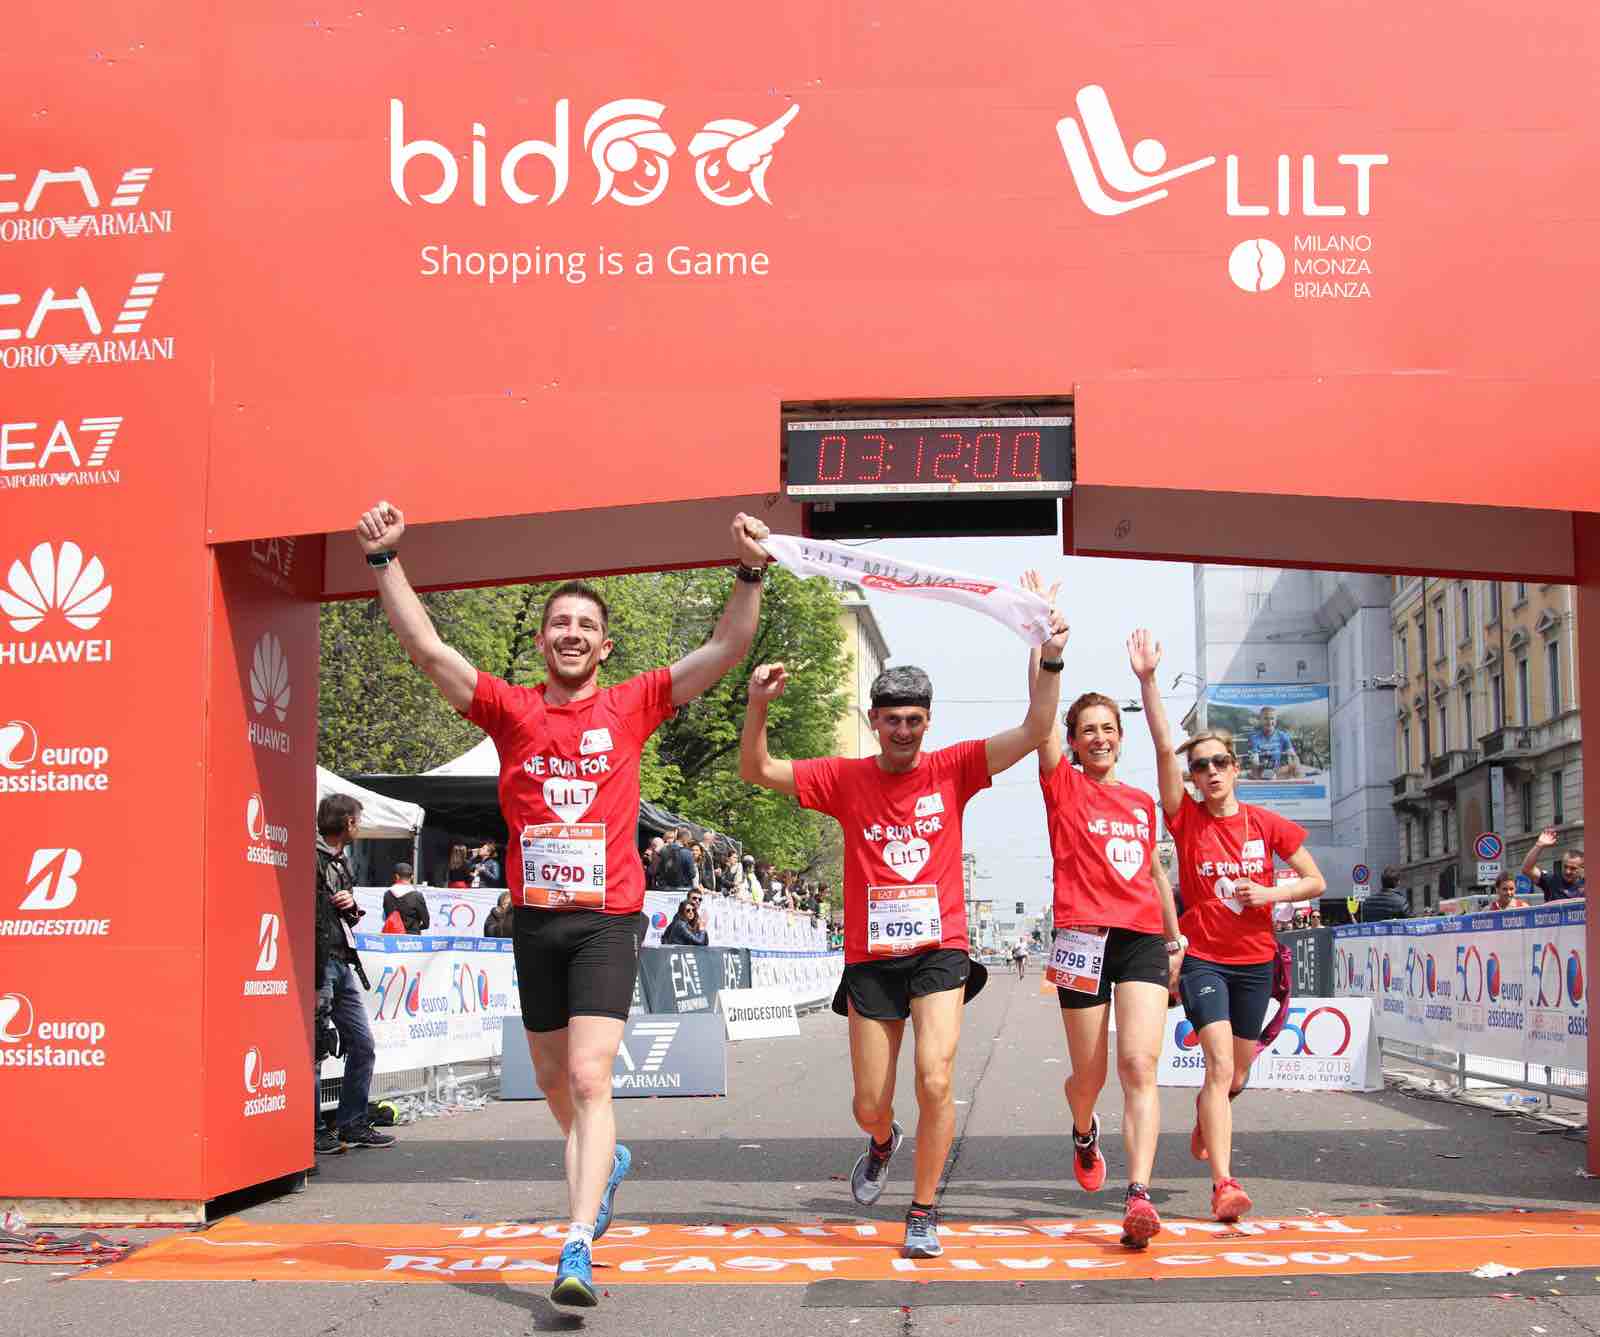 Milano Marathon 2022: Bidoo a sostegno di Lilt